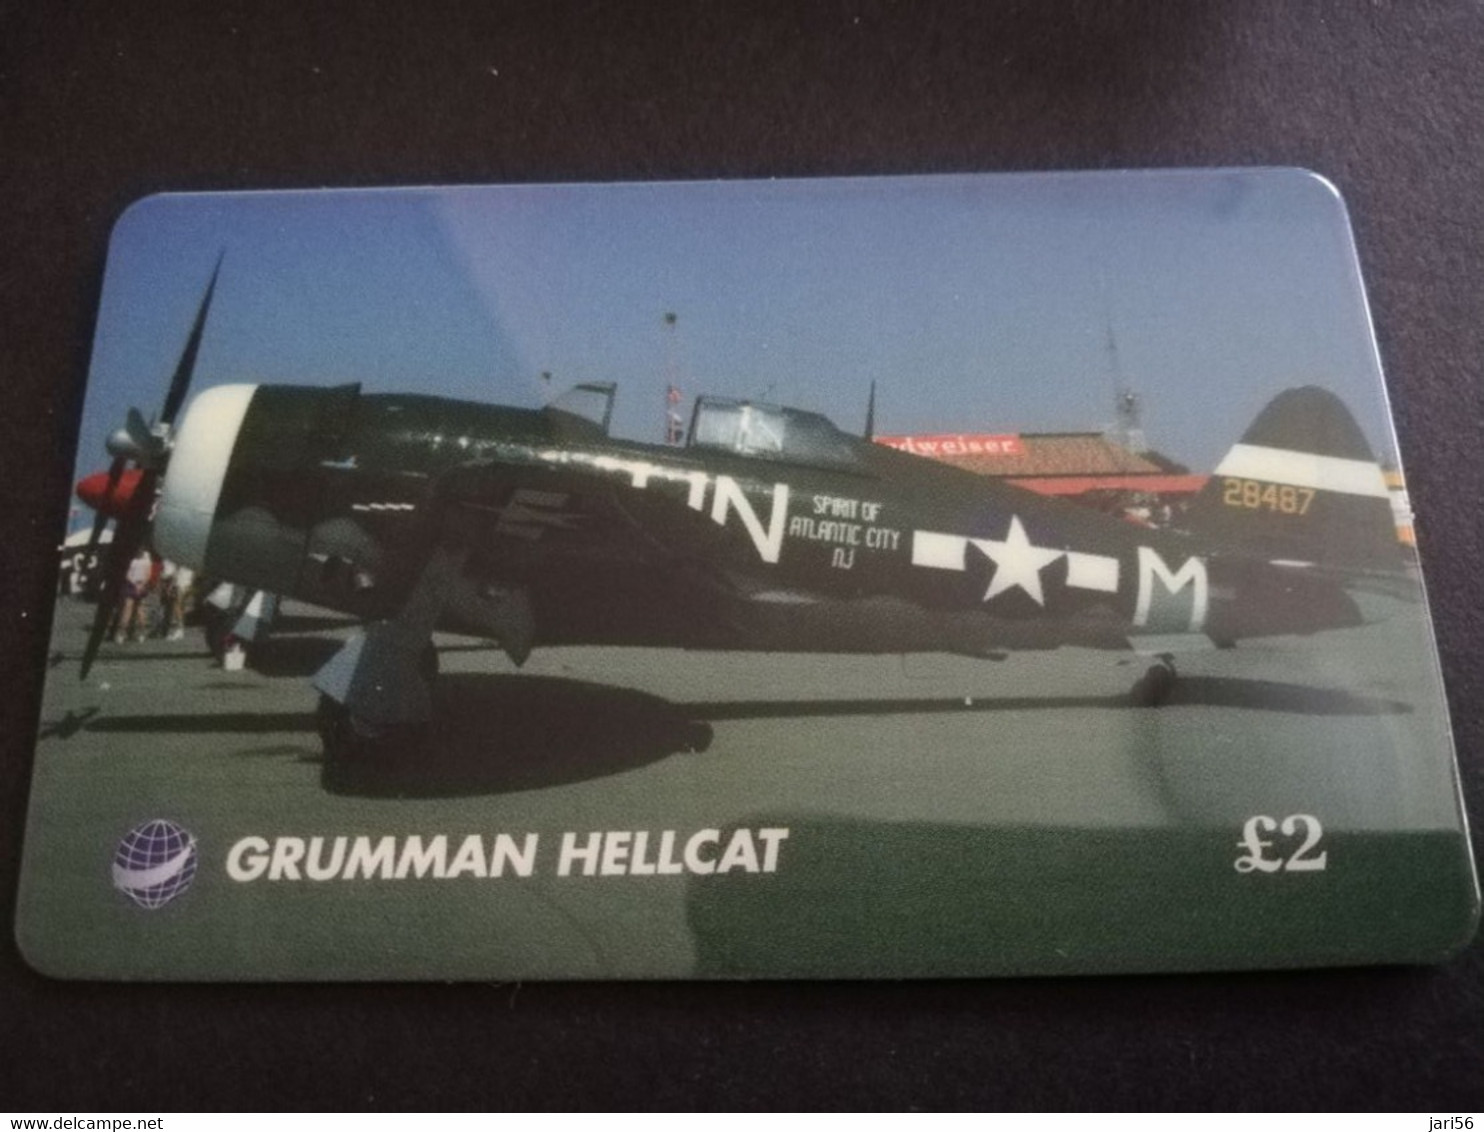 GREAT BRITAIN   2 POUND  AIR PLANES    GRUMMAN HELLCAT   PREPAID CARD      **5445** - [10] Colecciones